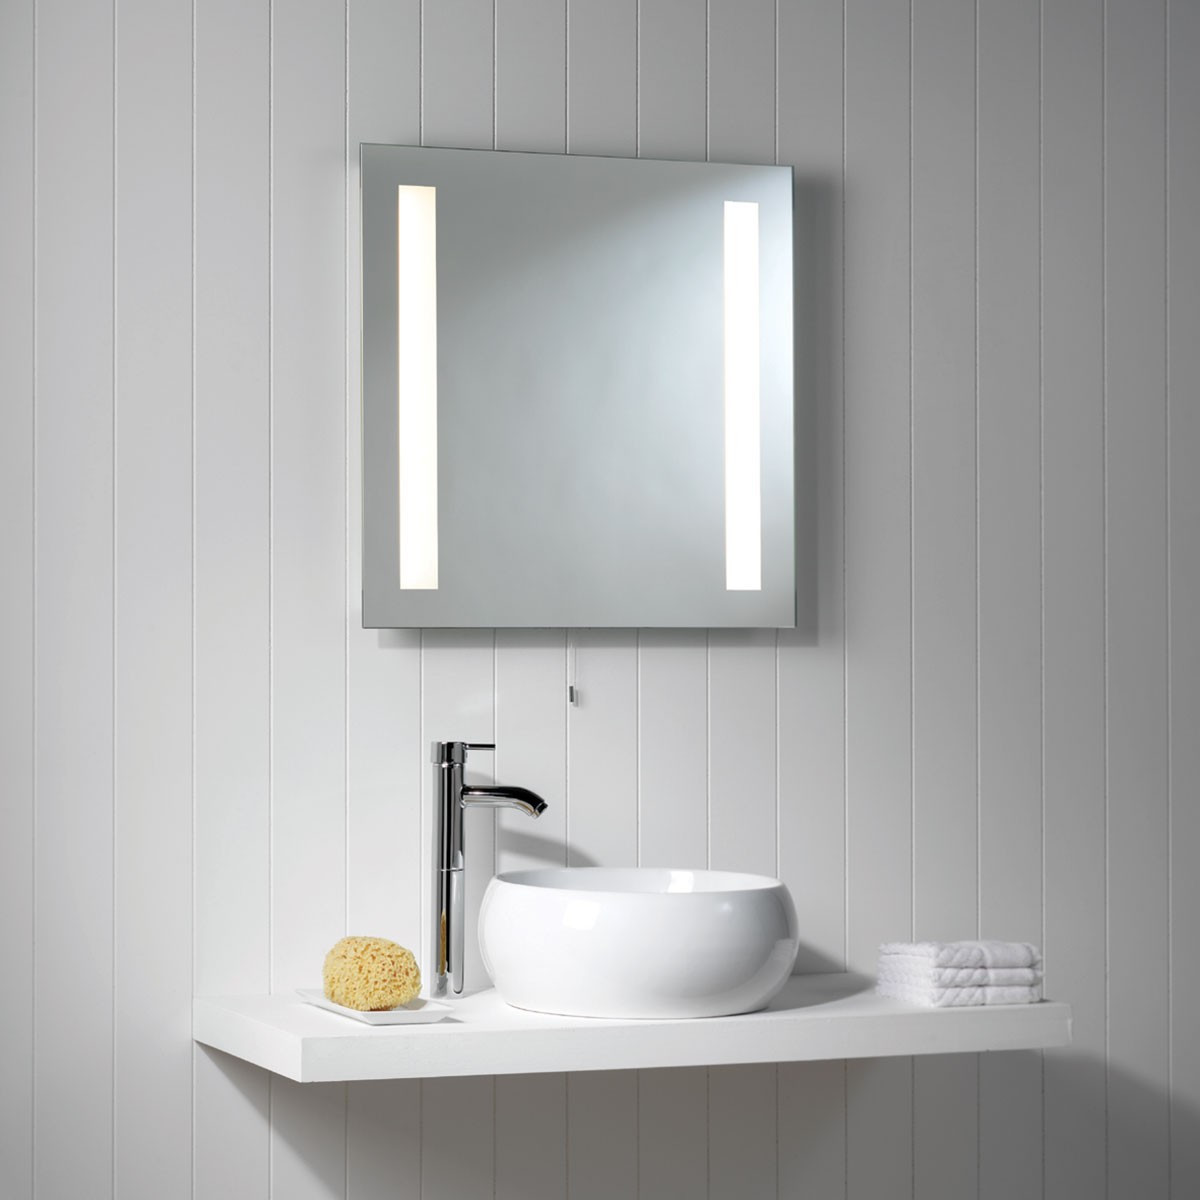 Bathroom Mirror With Light
 Astro Galaxy Bathroom Mirror Light at UK Electrical Supplies